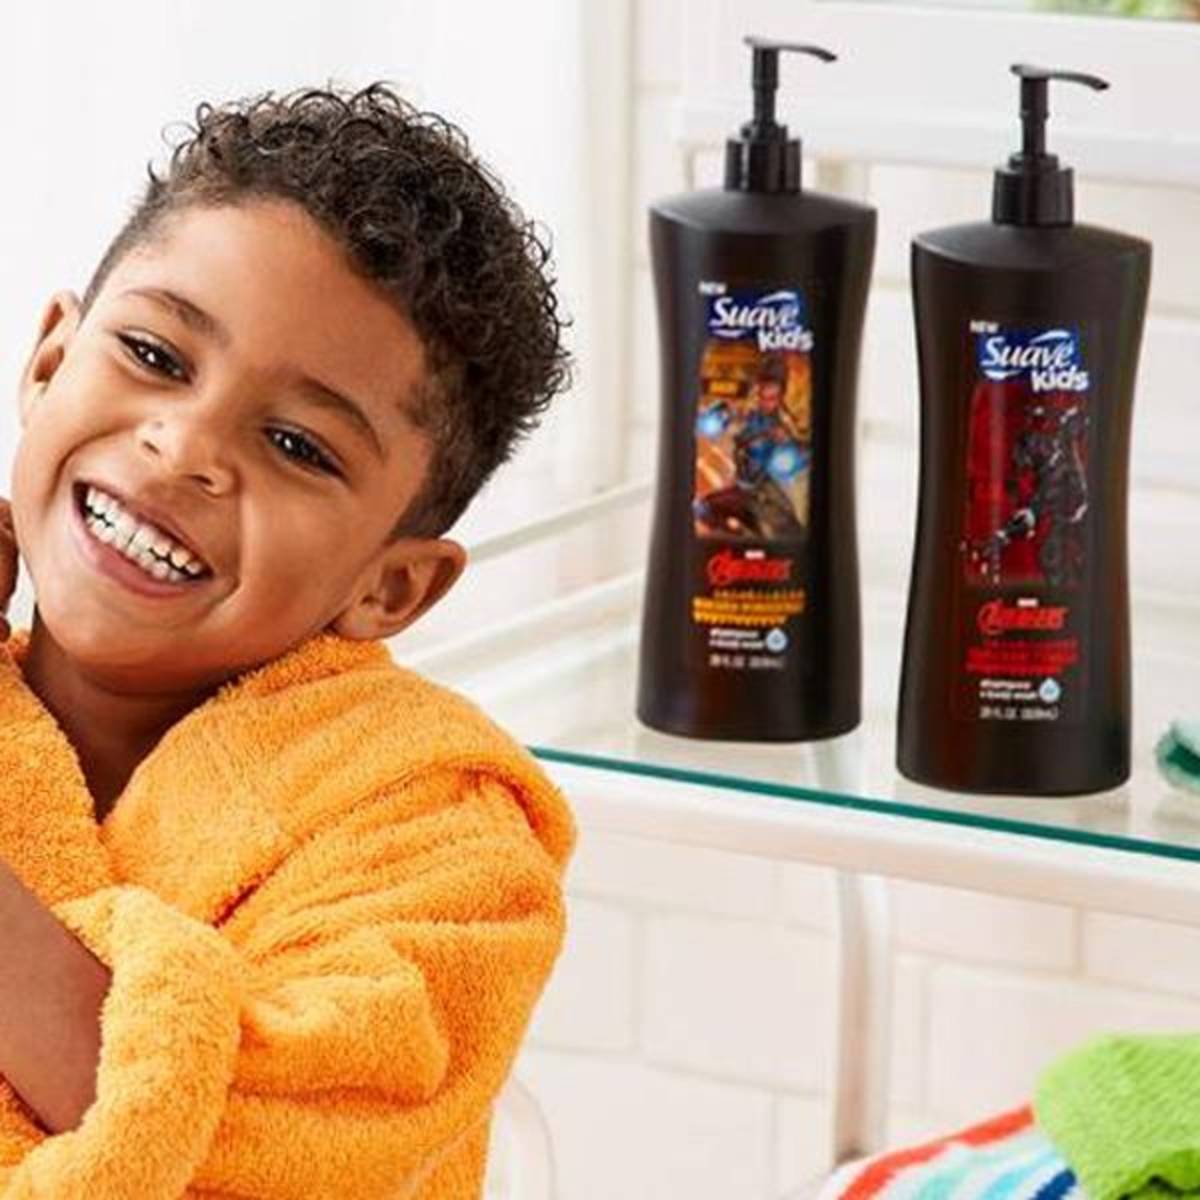 Suave Kids 2in1 Shampoo + Body Wash Avengers Black Panther Tripleberry 828ml Black - Baby Moo